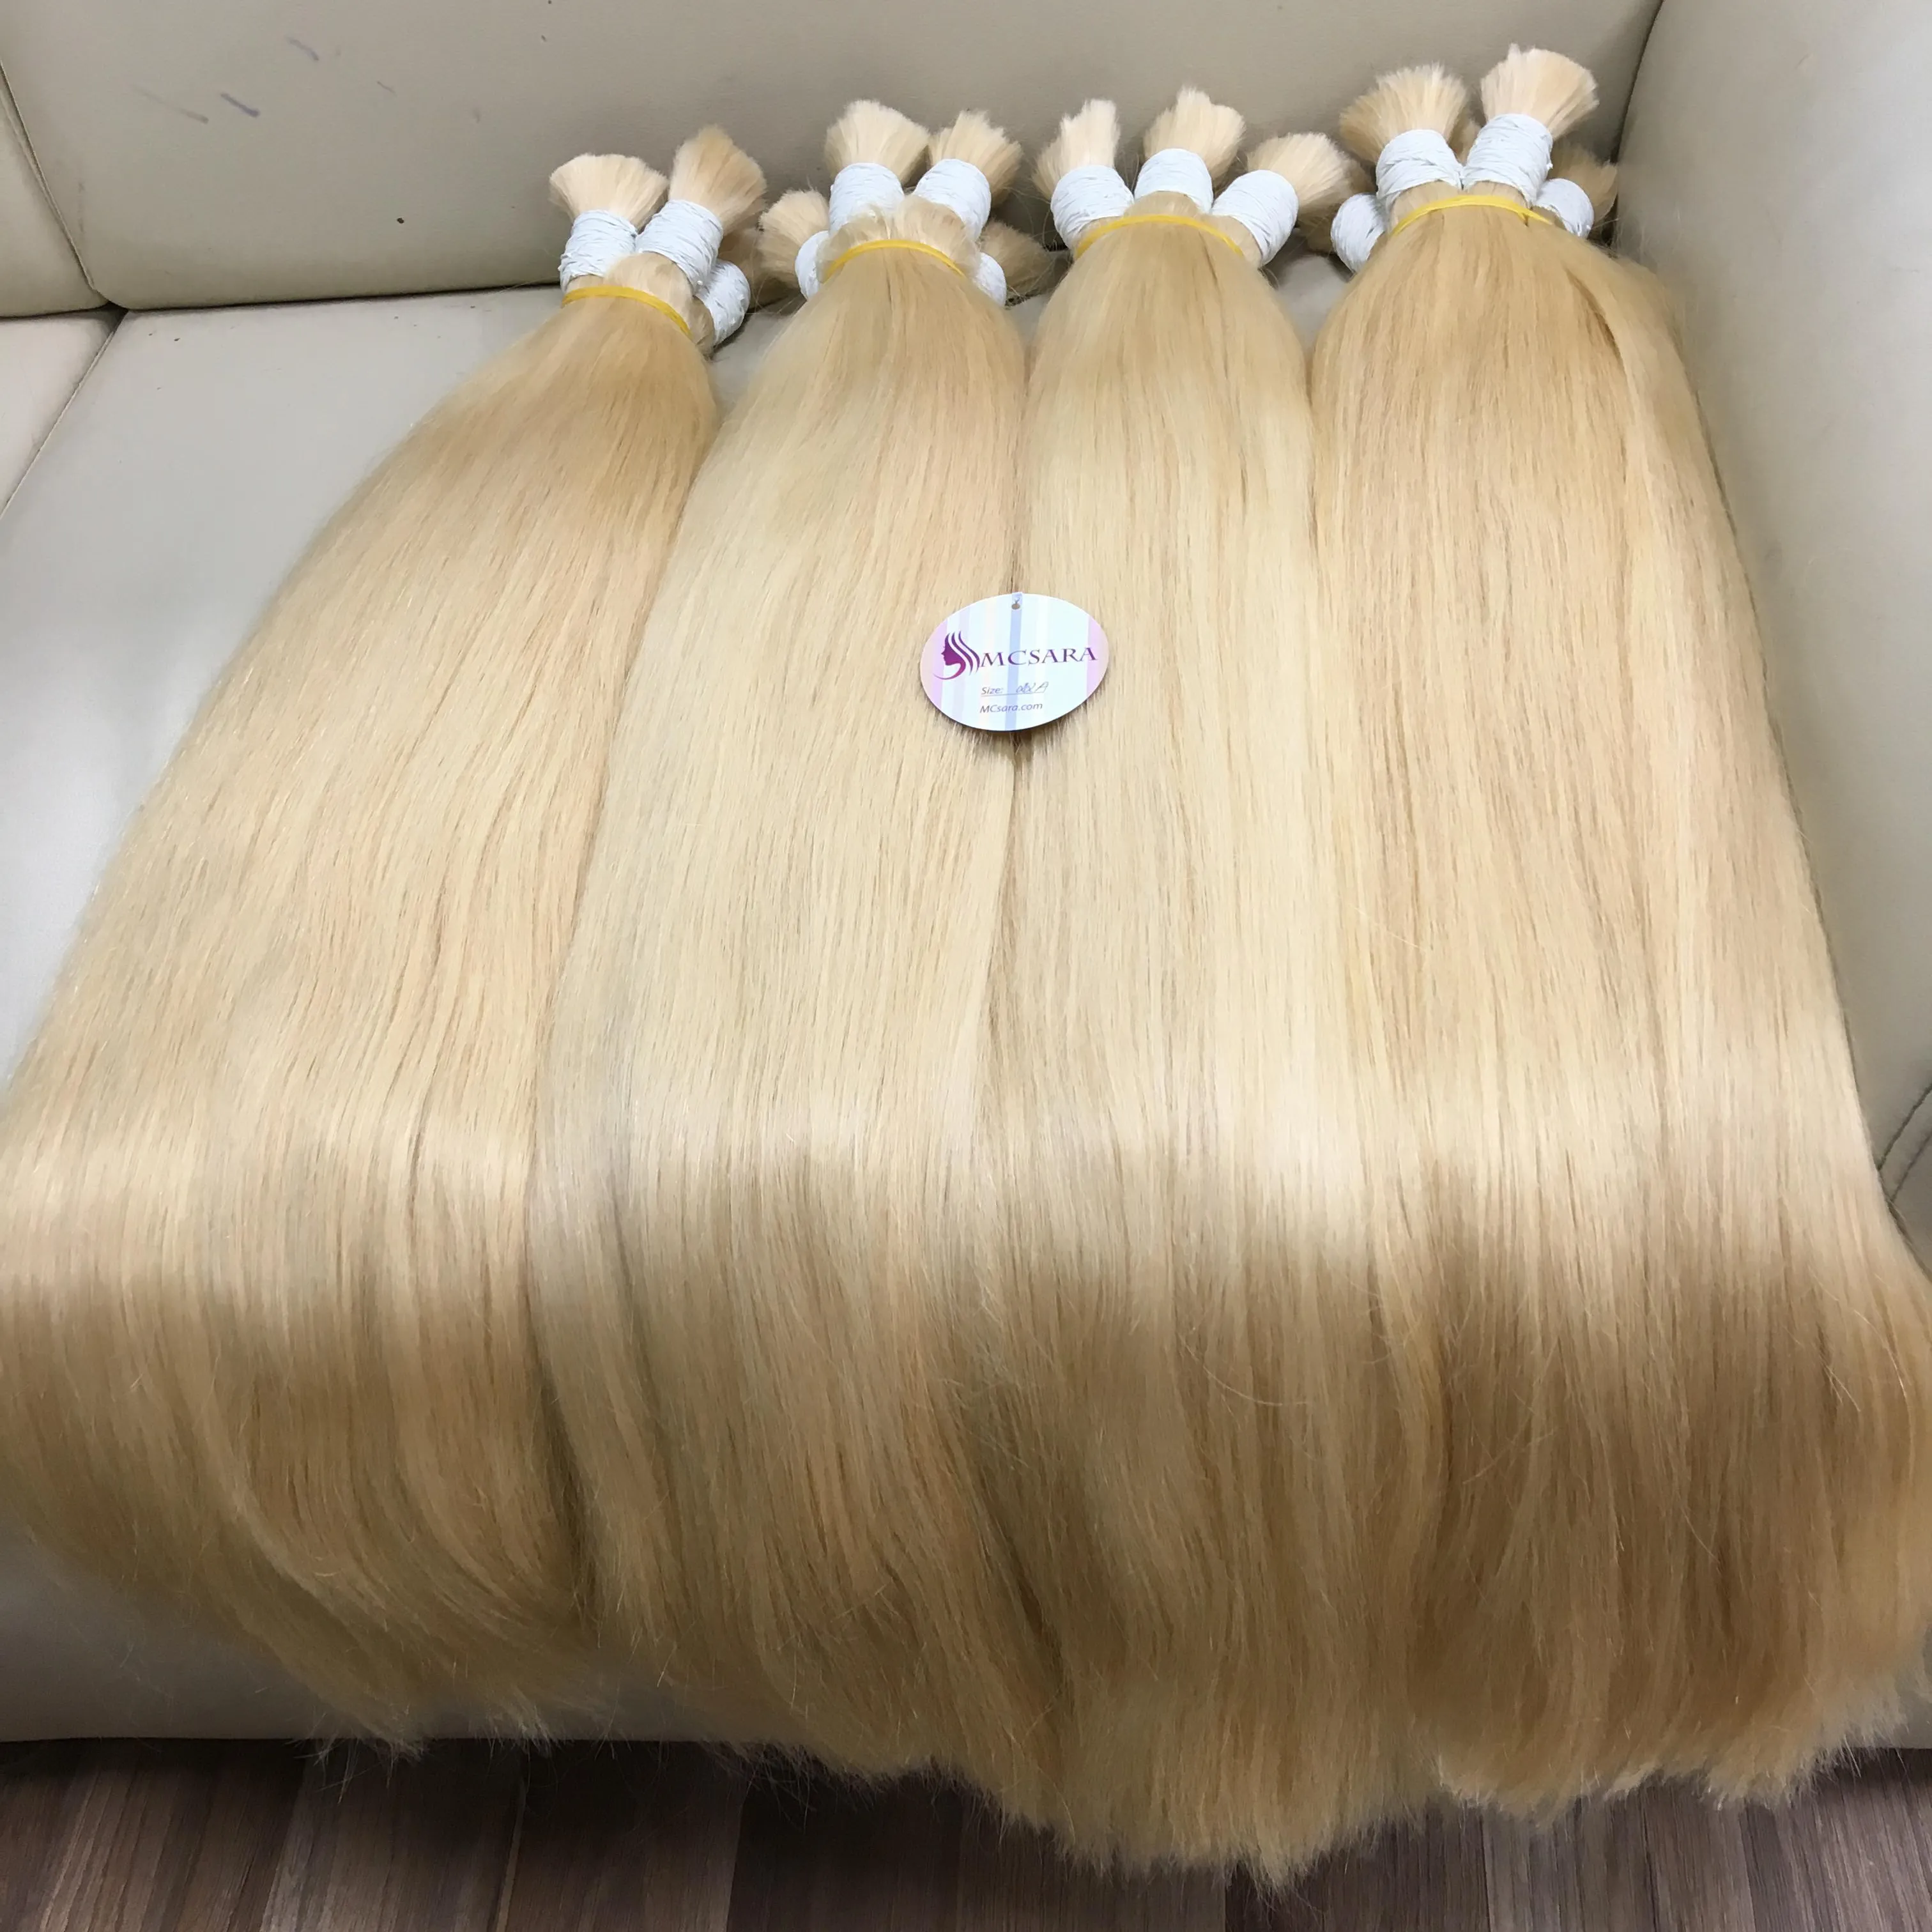 Factory Price 40 inches (100cm) Vietnamese Virgin Hair Blonde Color - Bulk Human Hair Extension